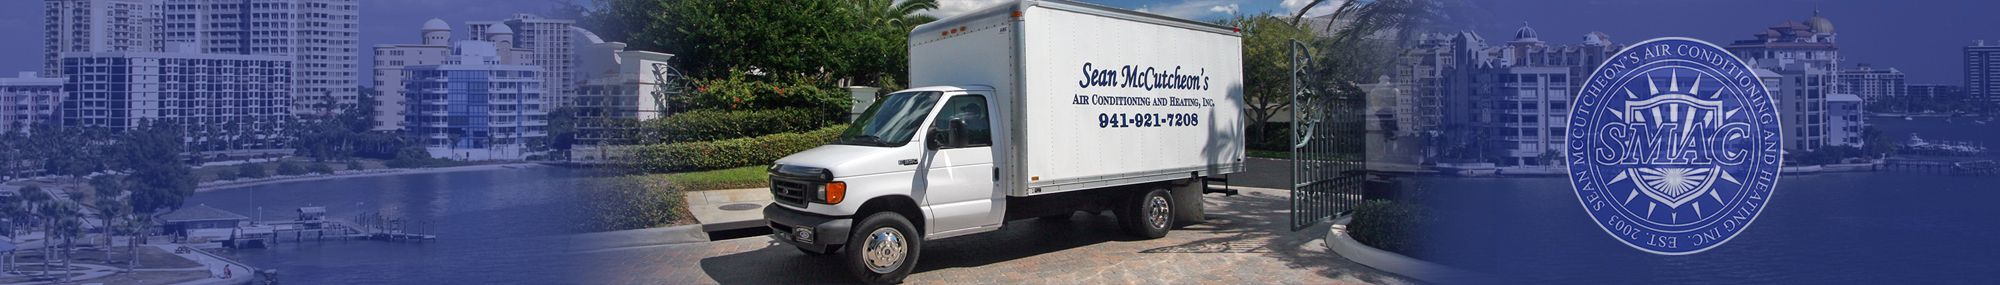 Sean McCutcheon's service truck and Sarasota skyline collage.